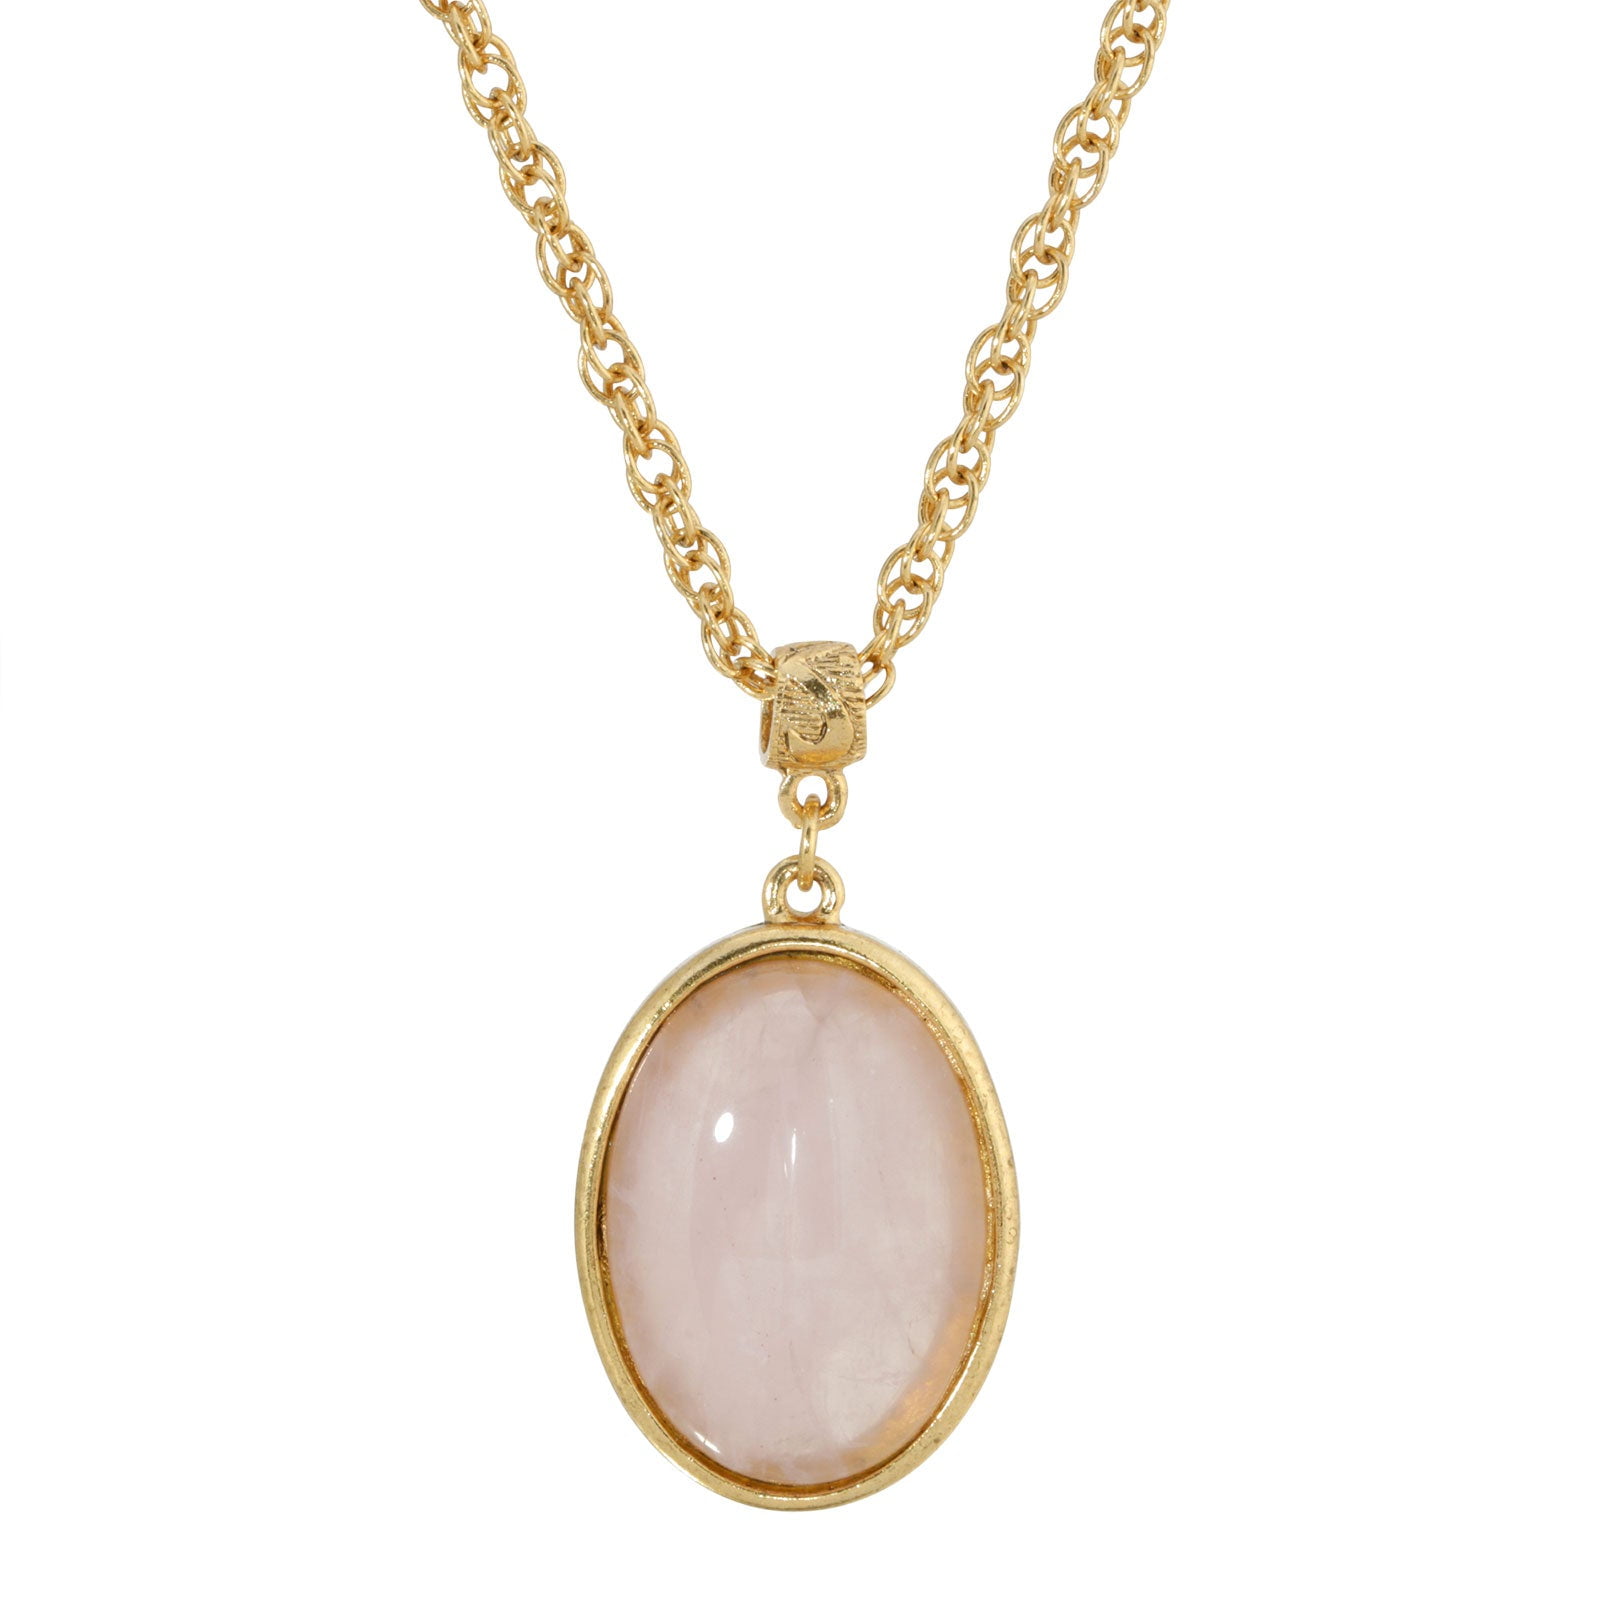 Isabella 14k White Gold Pendant Necklace in White Diamond | Kendra Scott